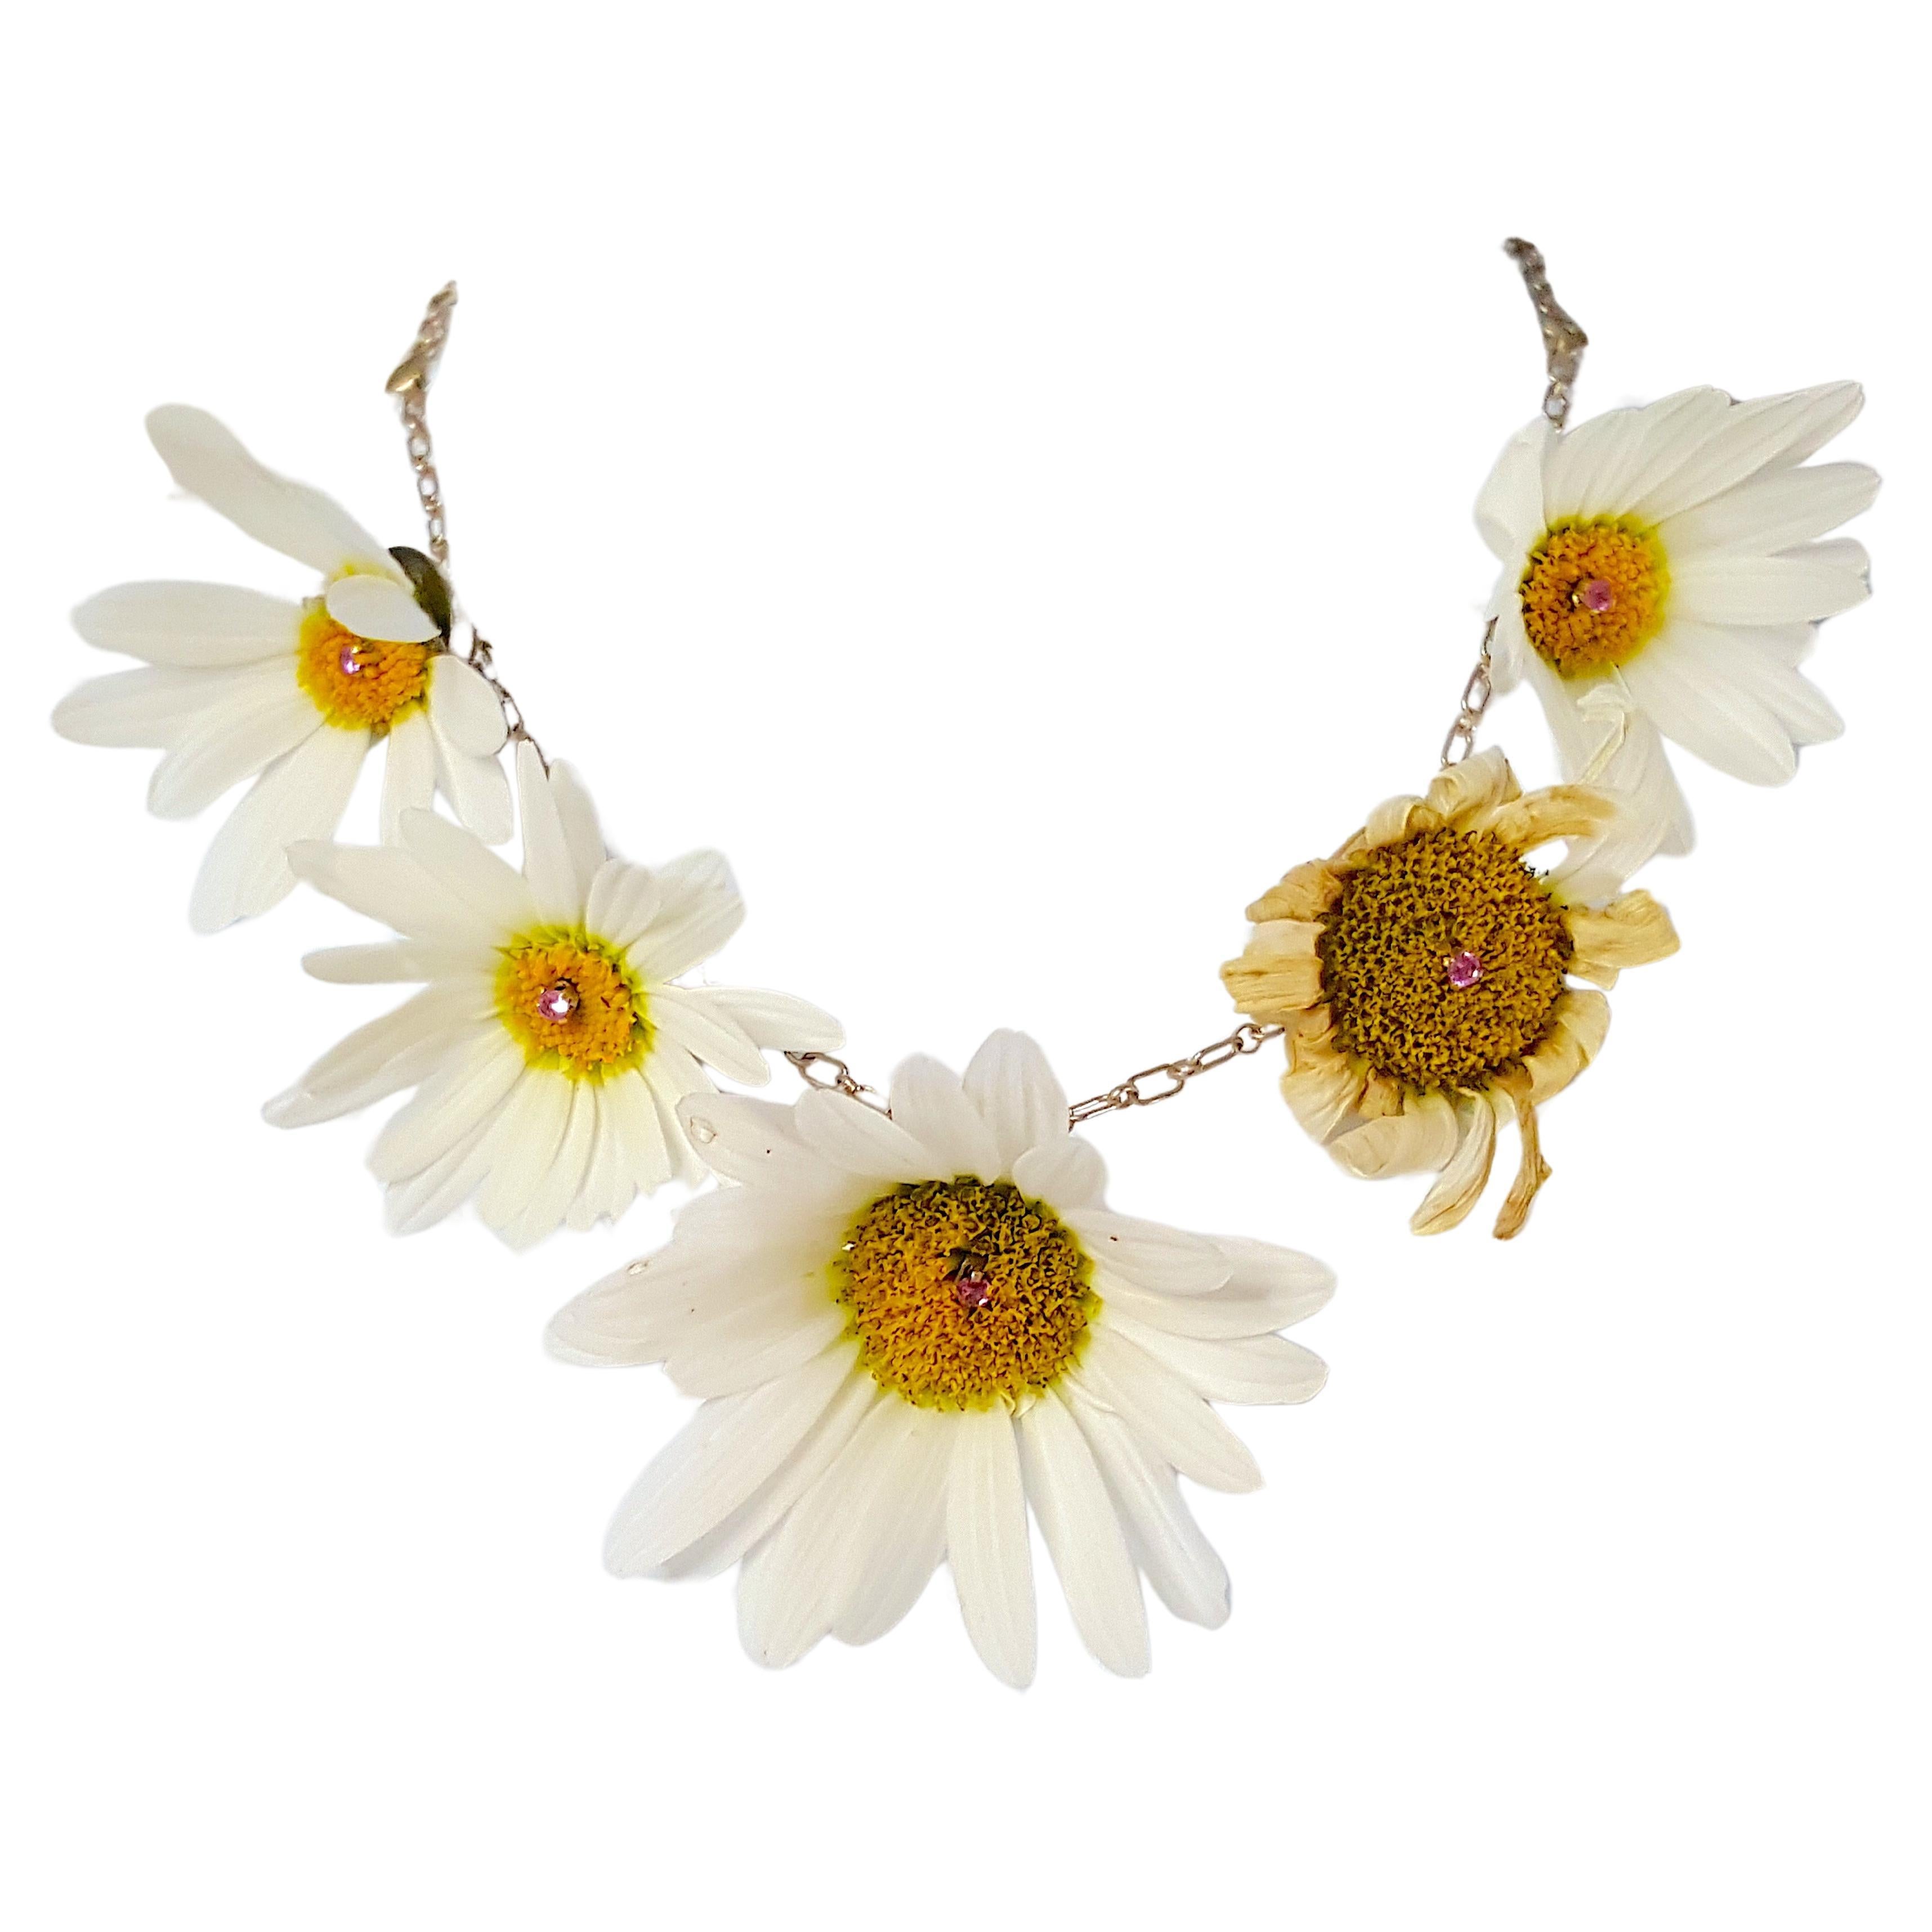 Artist Sterling ProngSetCrystalPendants For FreshFlowers Jewelers'Werk Necklace For Sale